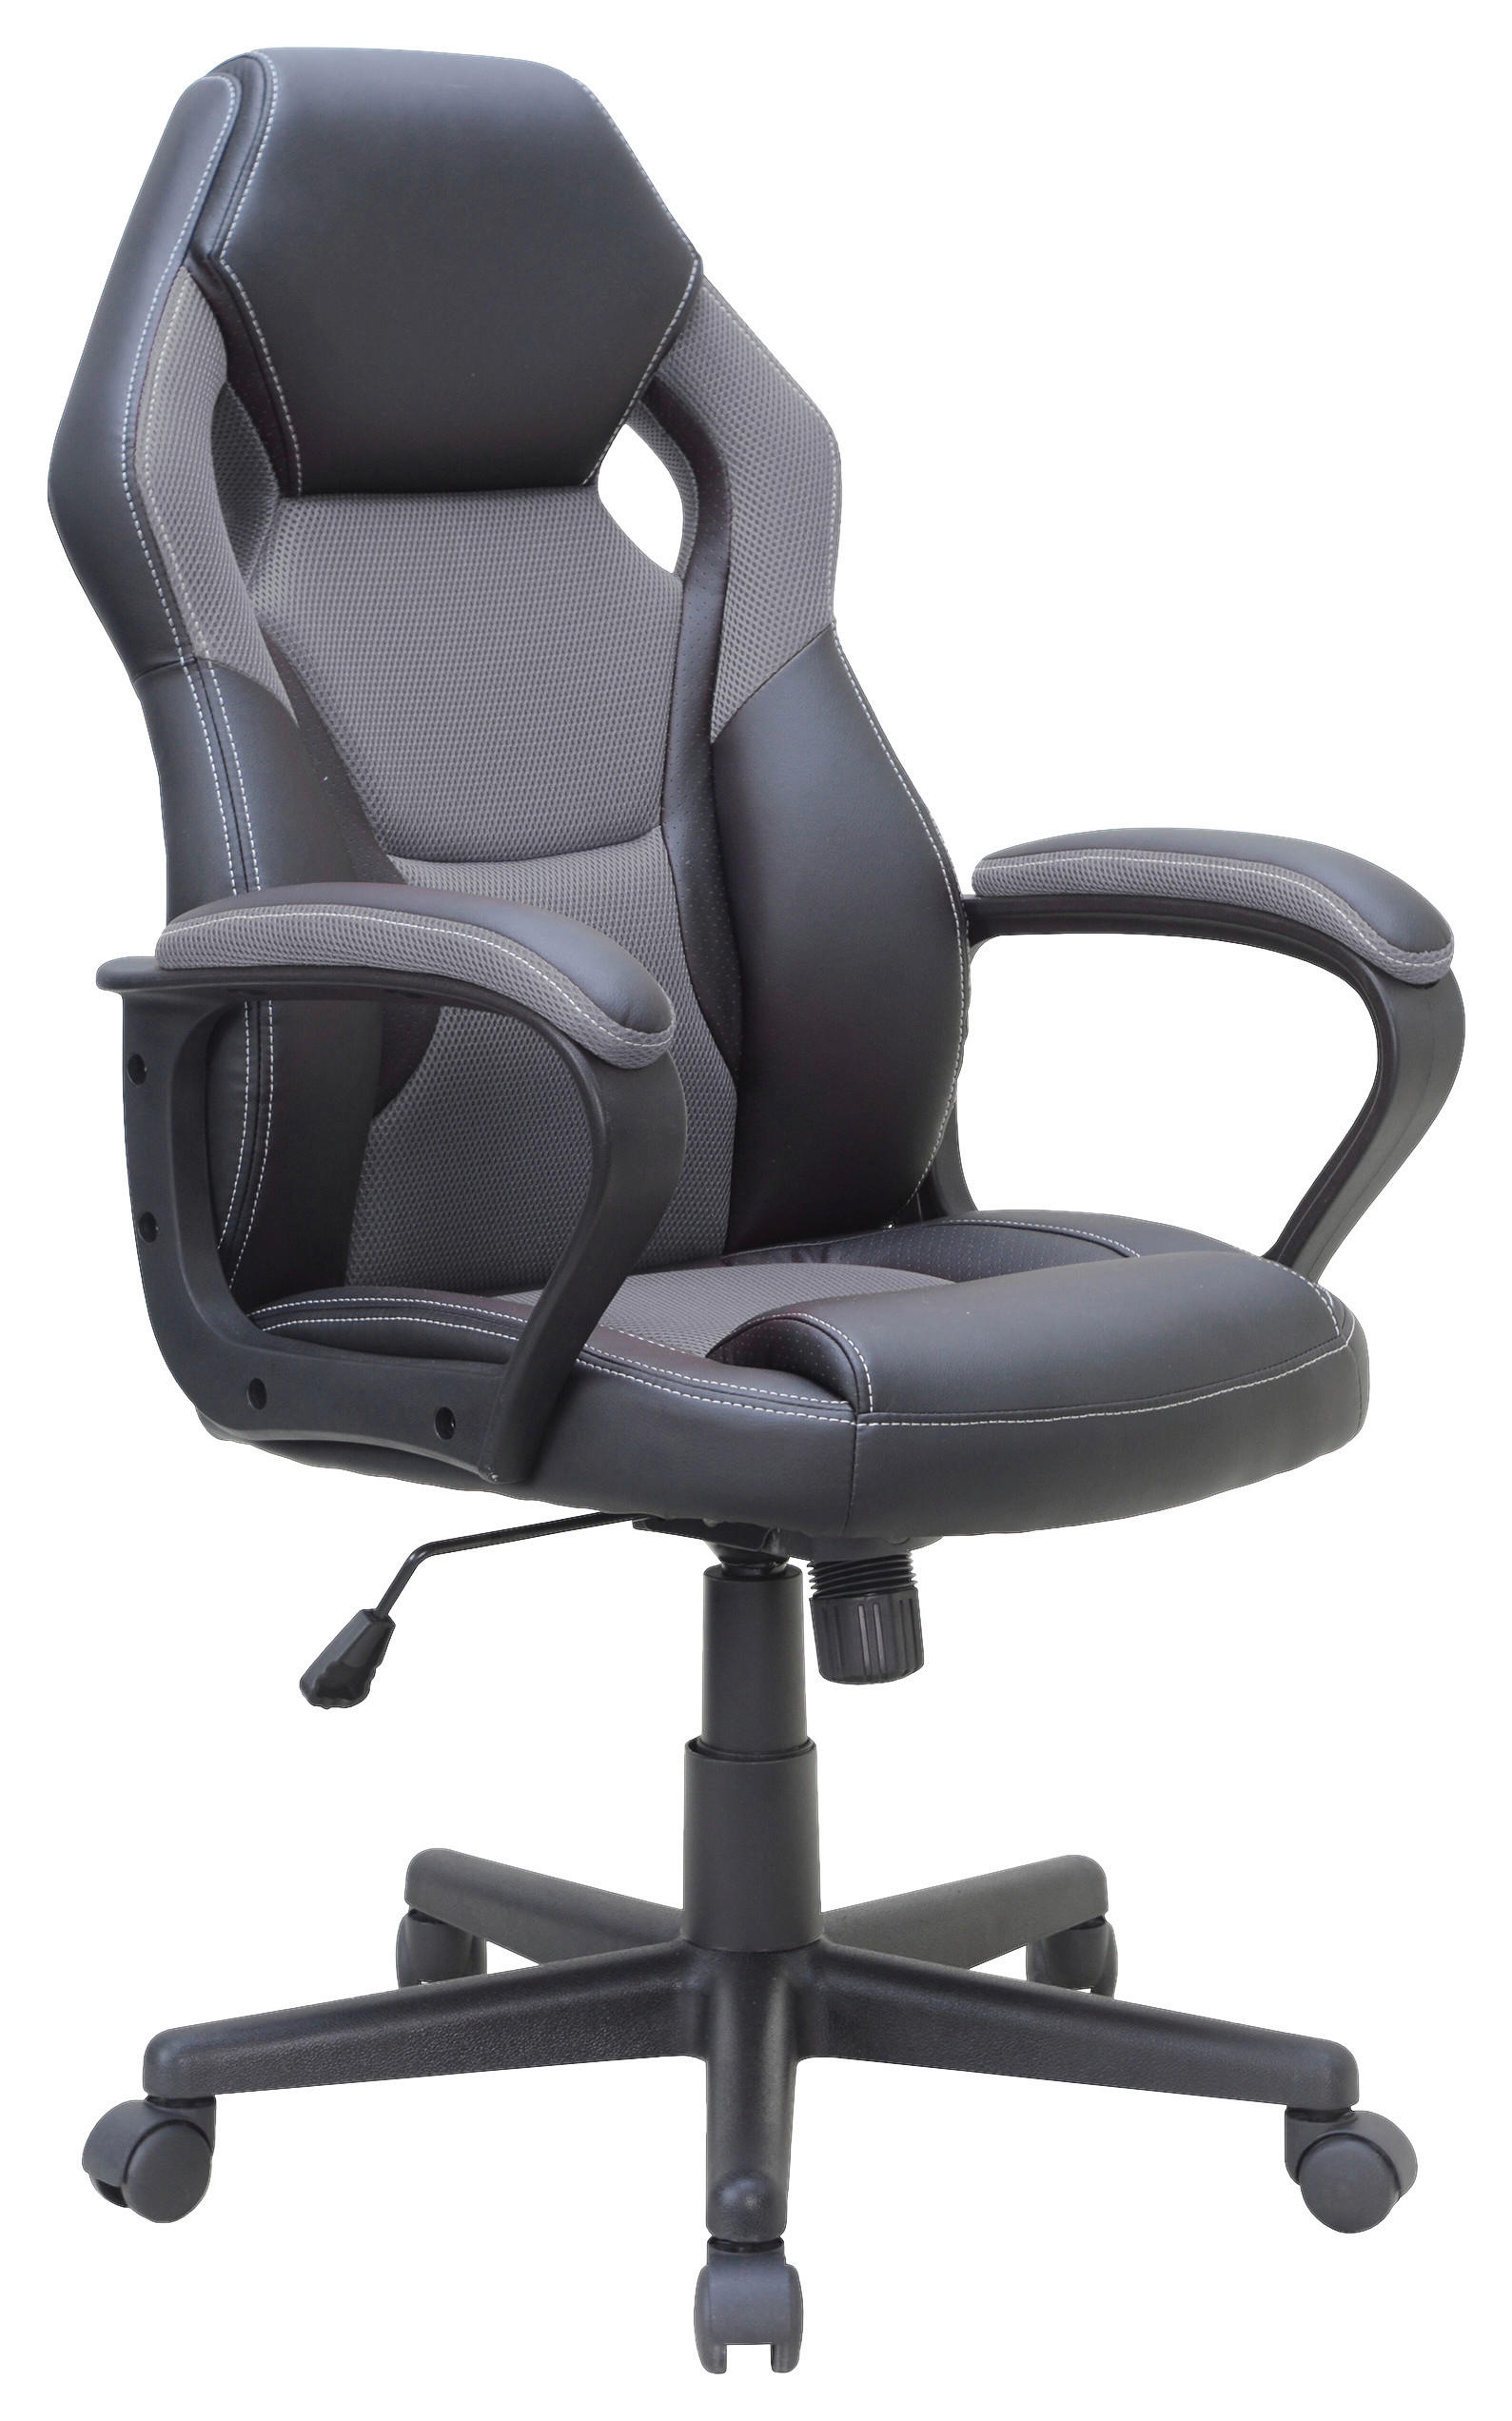 Gaming-Sessel MATTEO schwarz grau schwarz Kunstleder Netzstoff Kunststoff